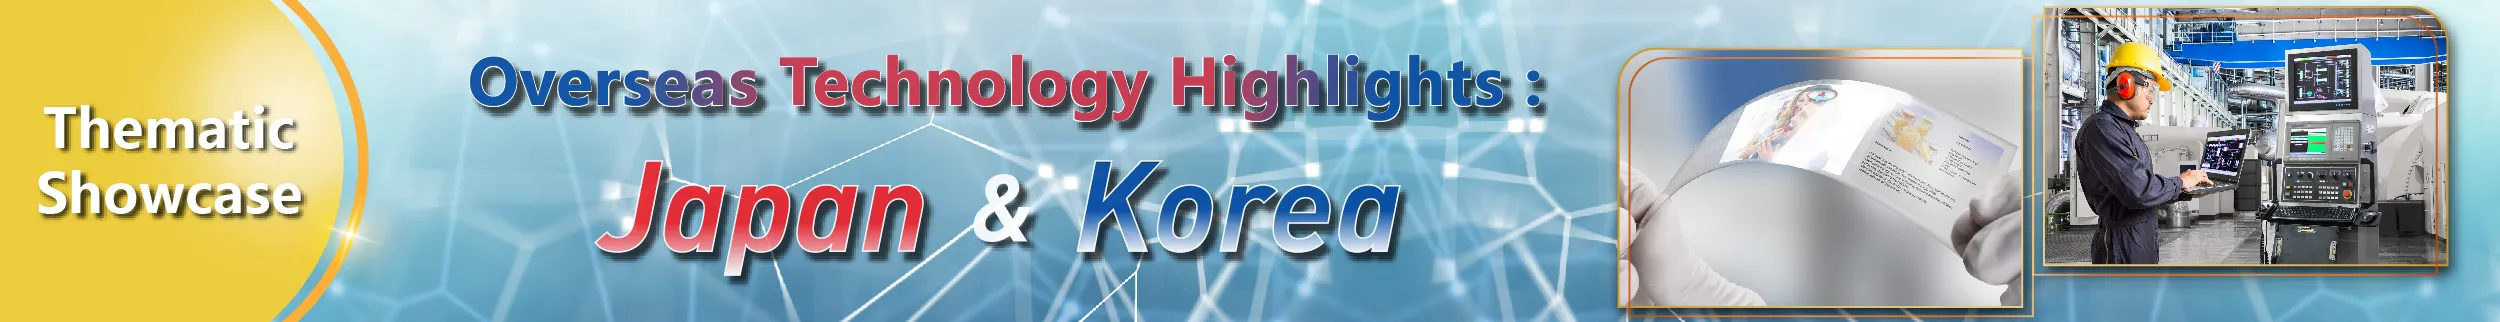 Overseas Technology Highlights: Japan & Korea